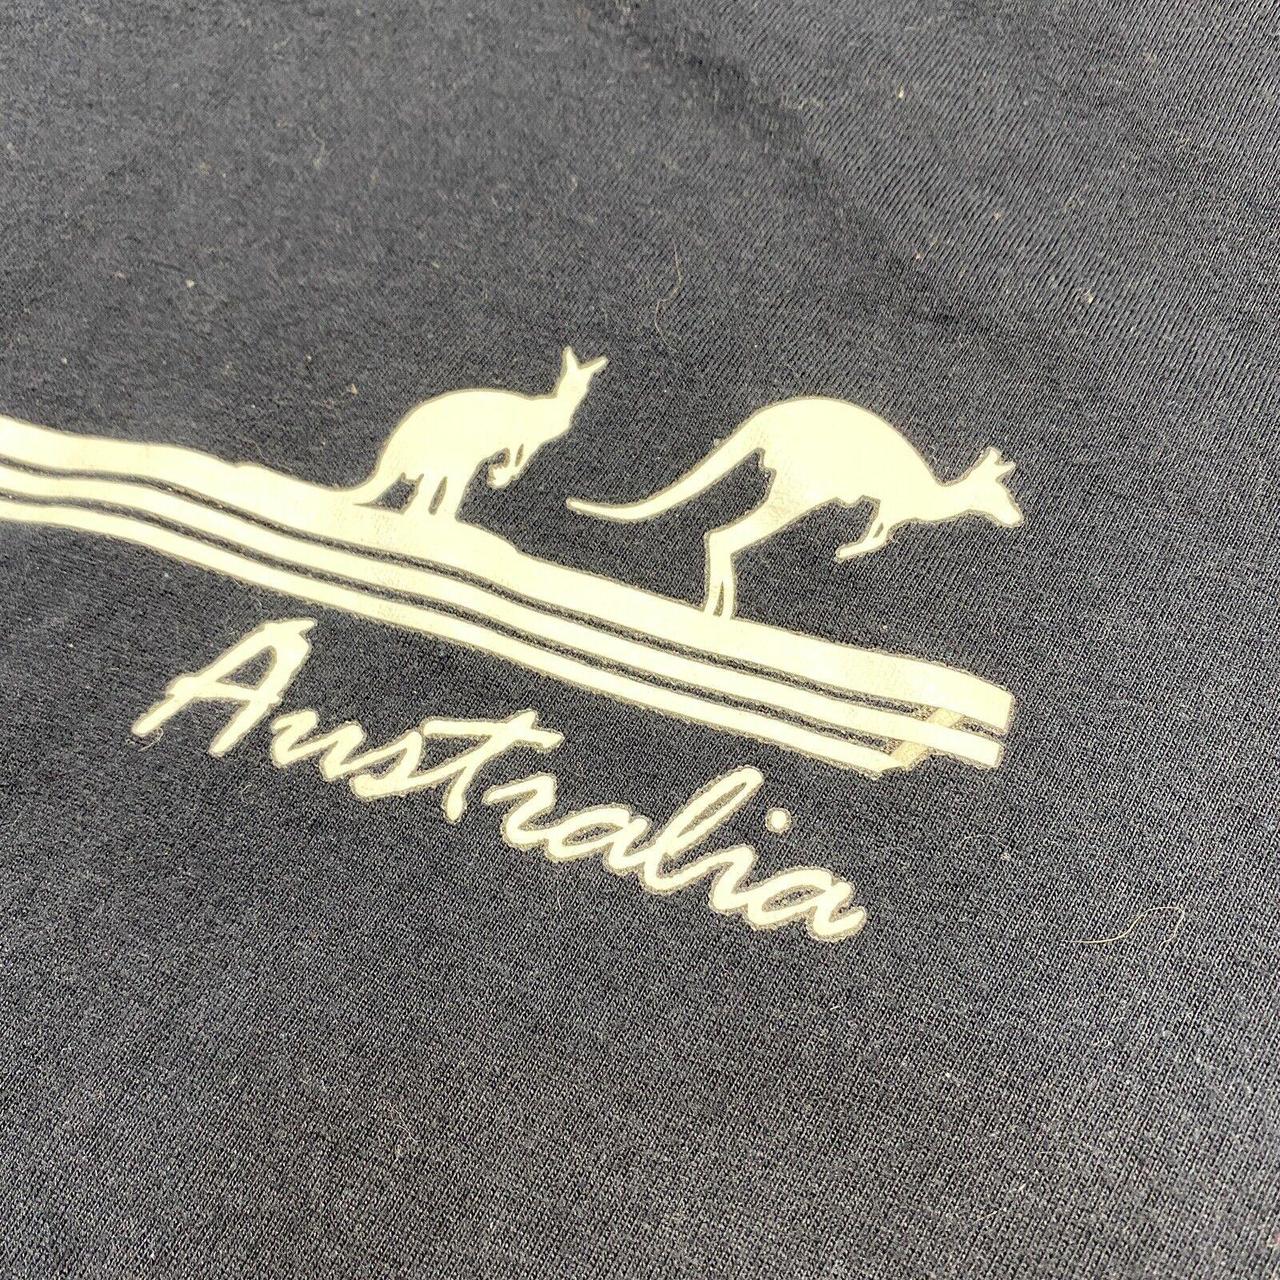 Product Image 3 - Australia T Shirt Adult Small